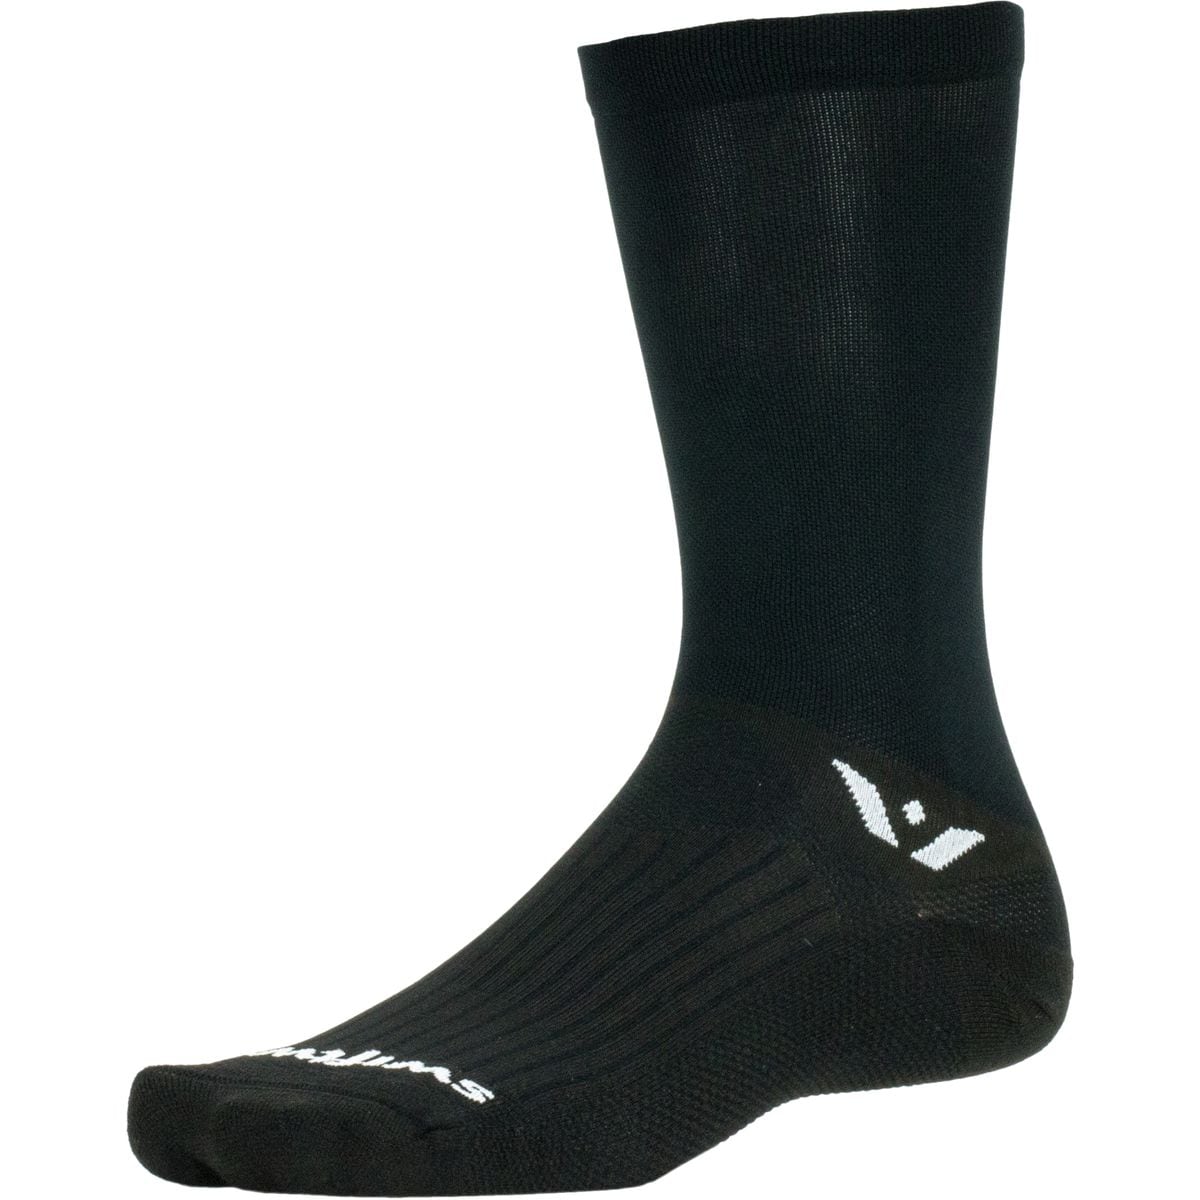 Swiftwick Aspire Seven Sock Black, L - Men's